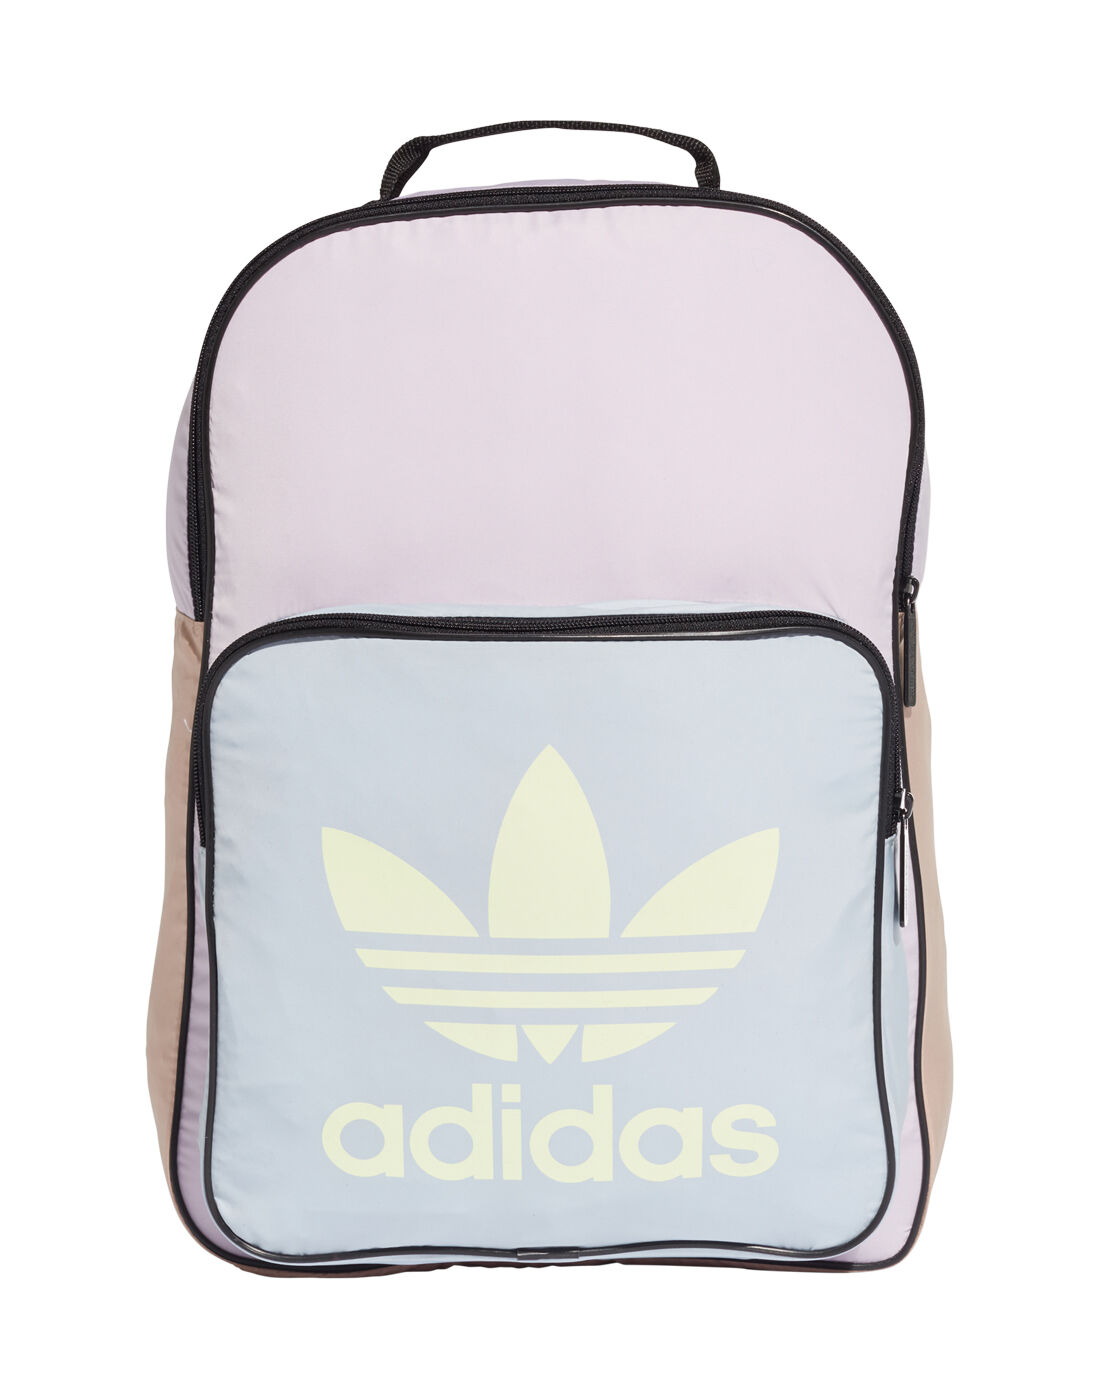 trefoil backpack adidas